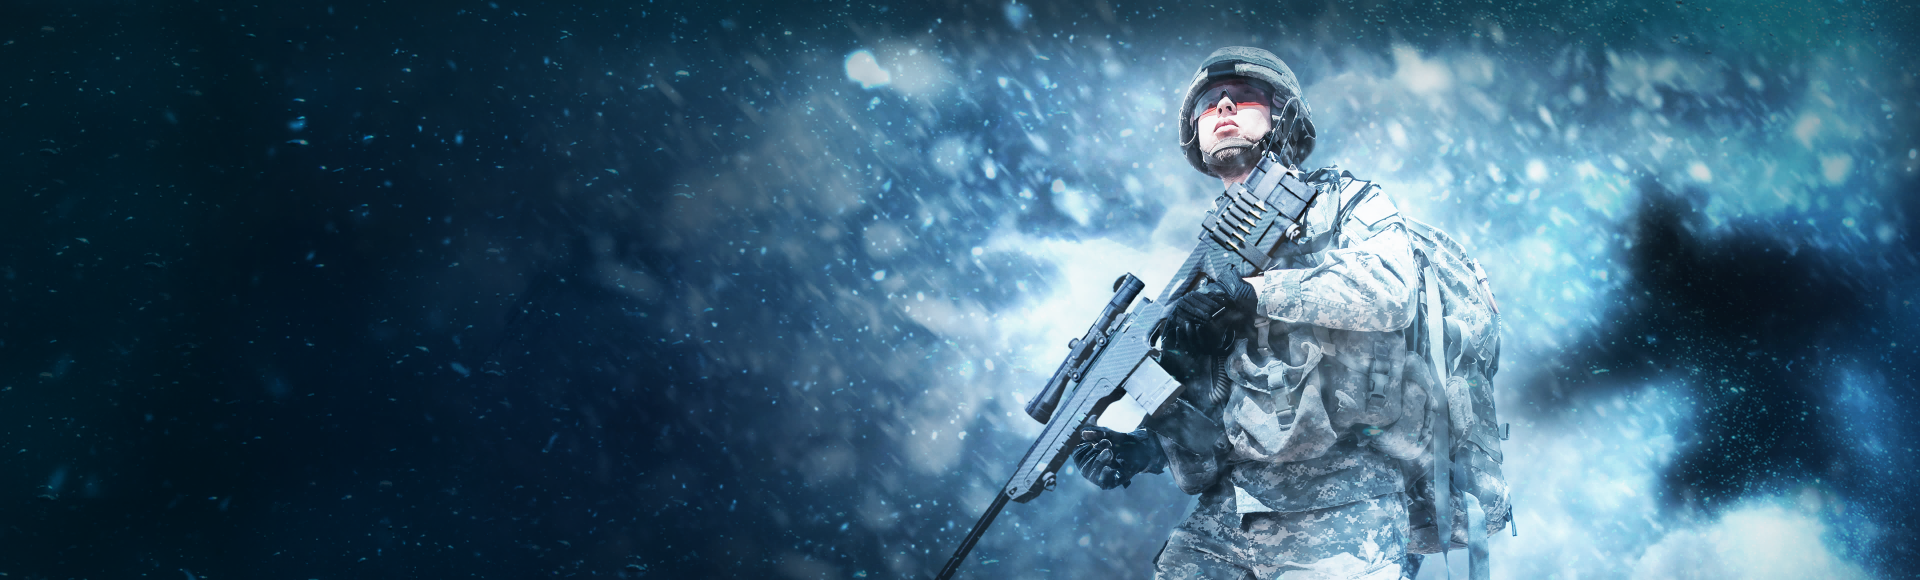 Bundle billboard of Winter Sniper